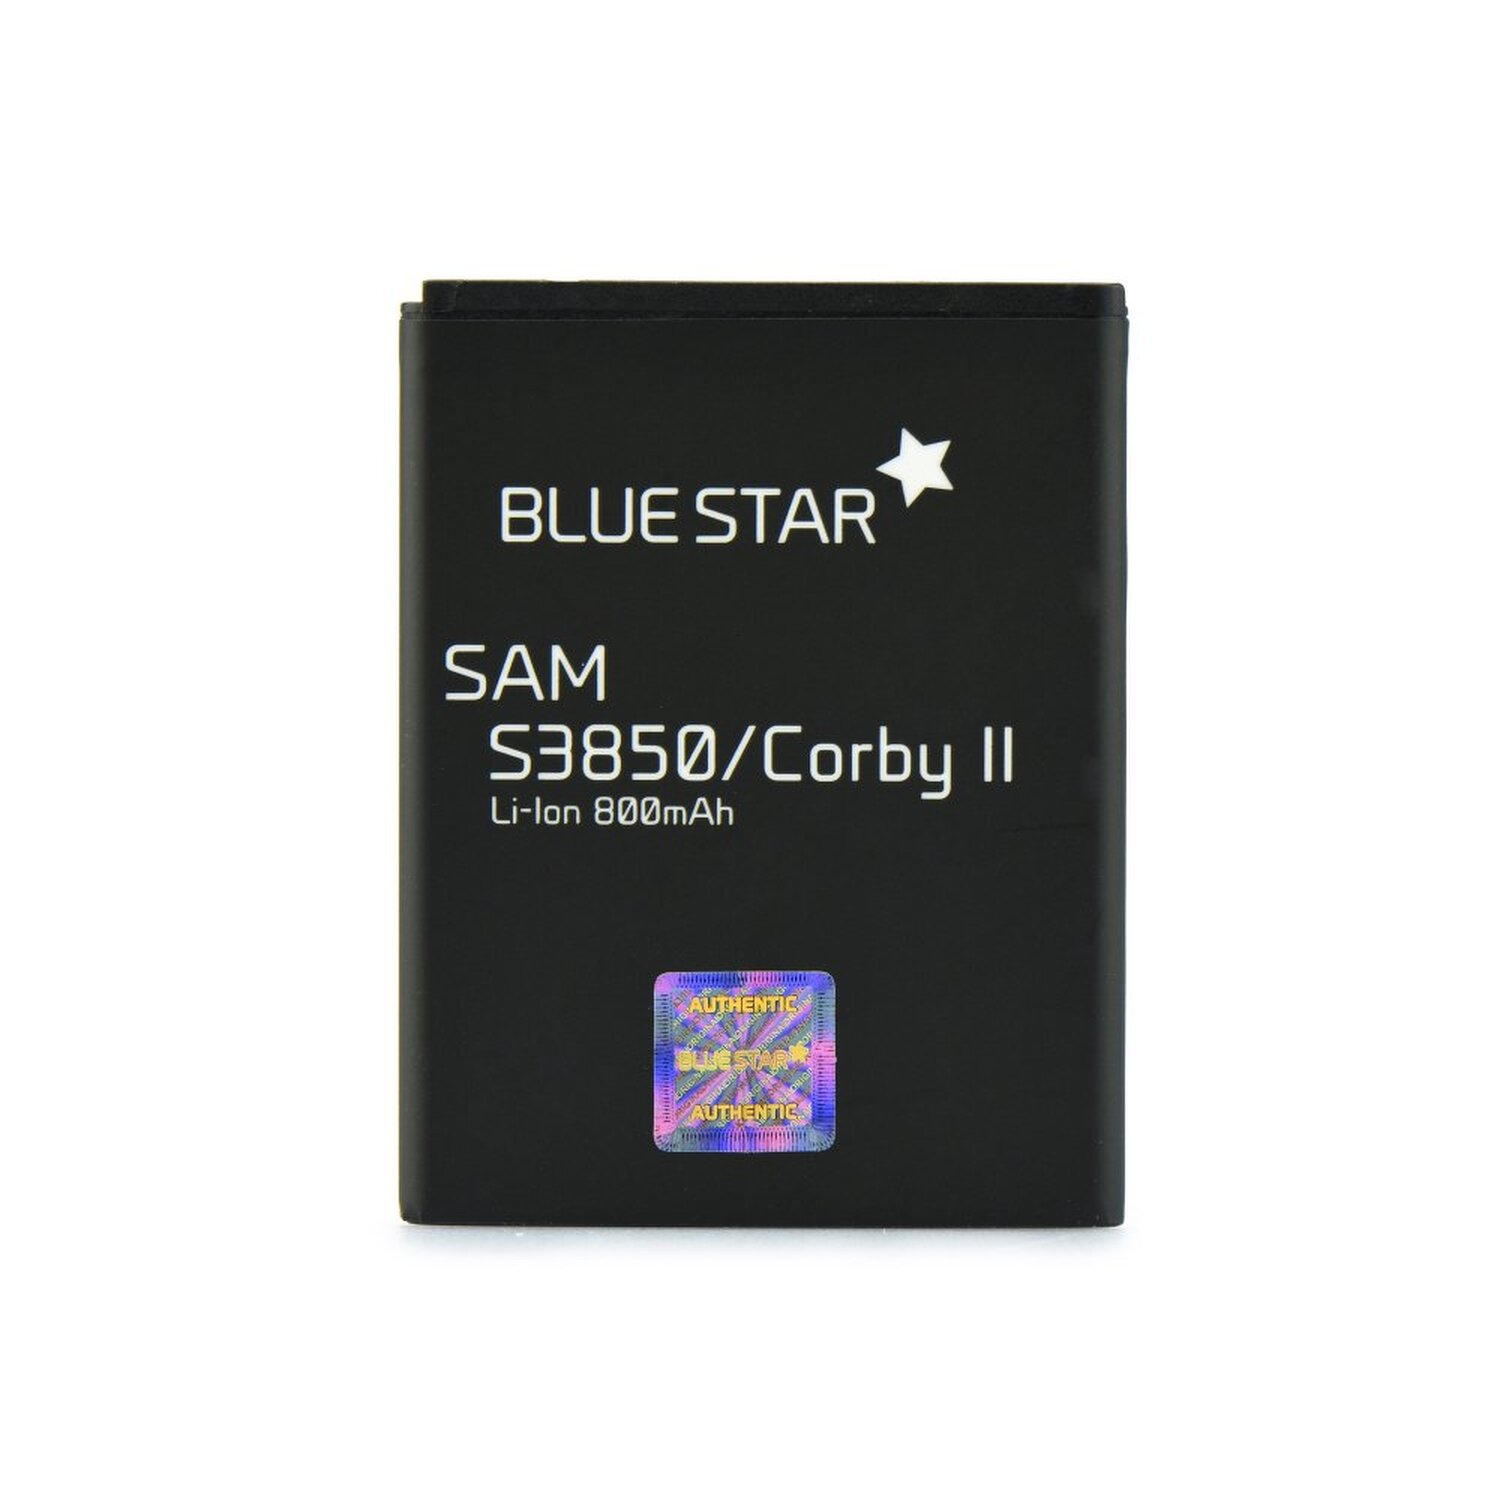 BLUESTAR Akku Samsung Li-Ion / Chat S3850 Corby II Handyakku für 335